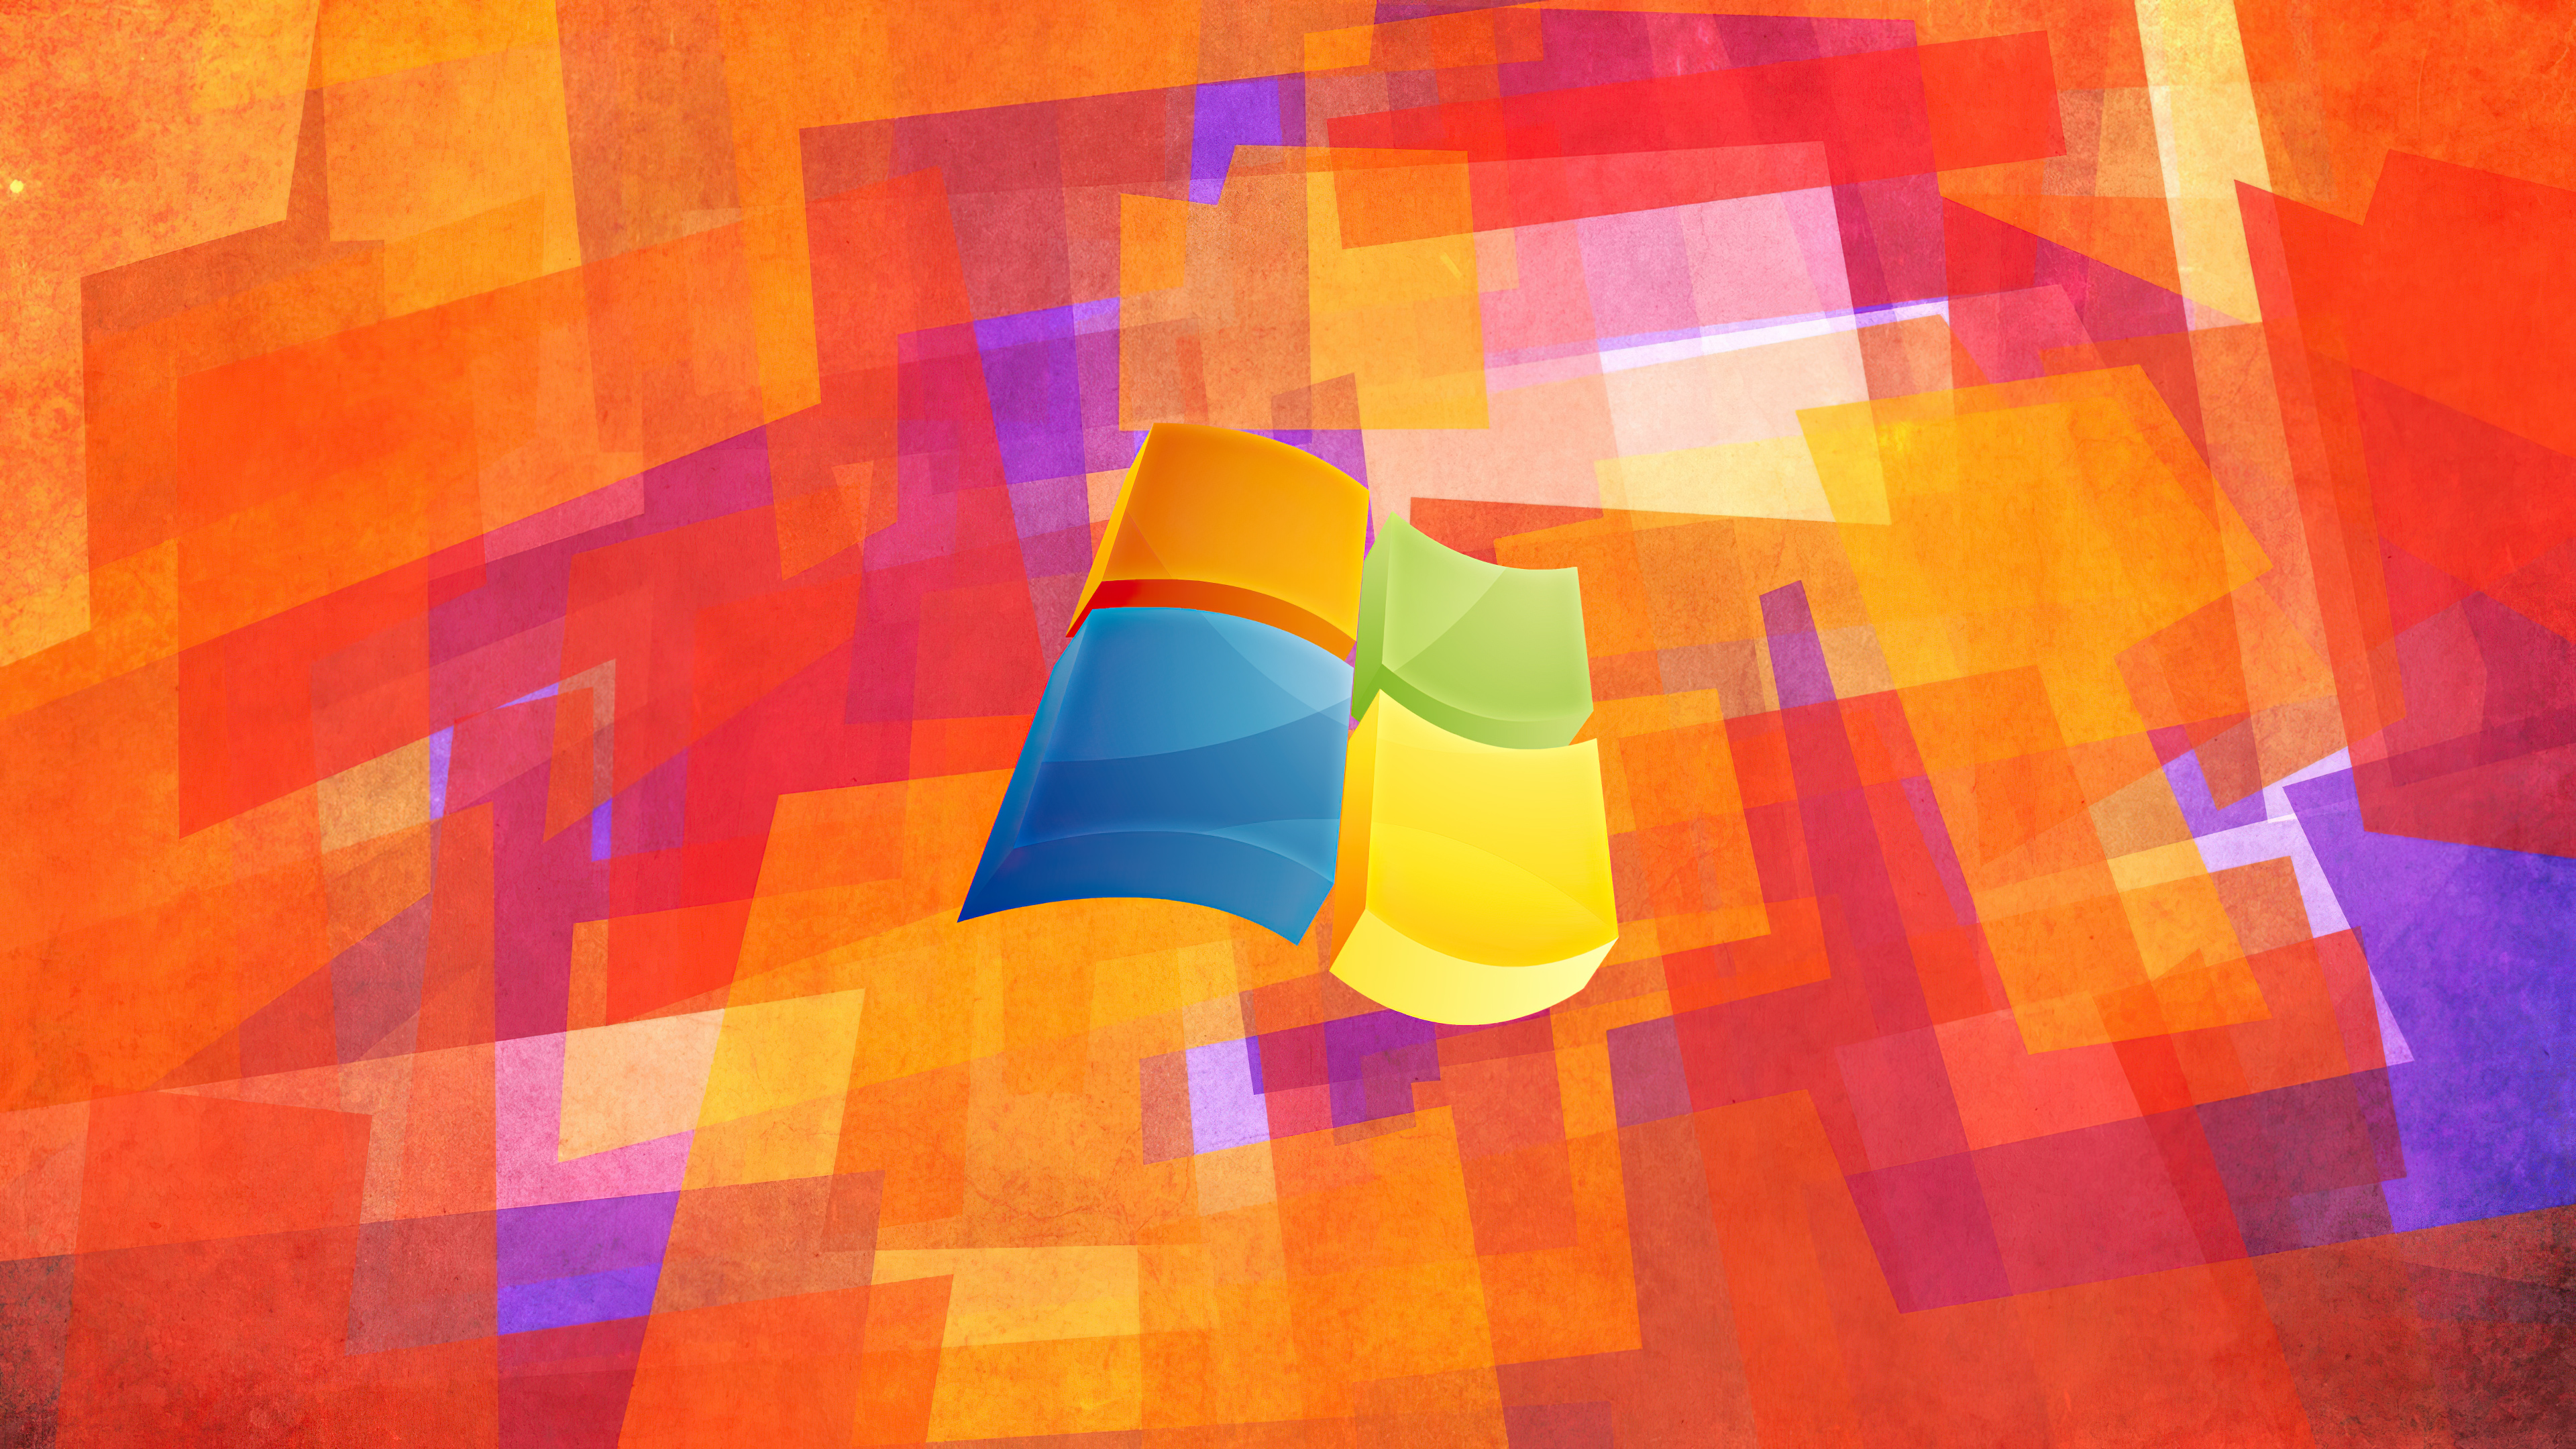 Wallpapers Windows logo hi-tech on the desktop